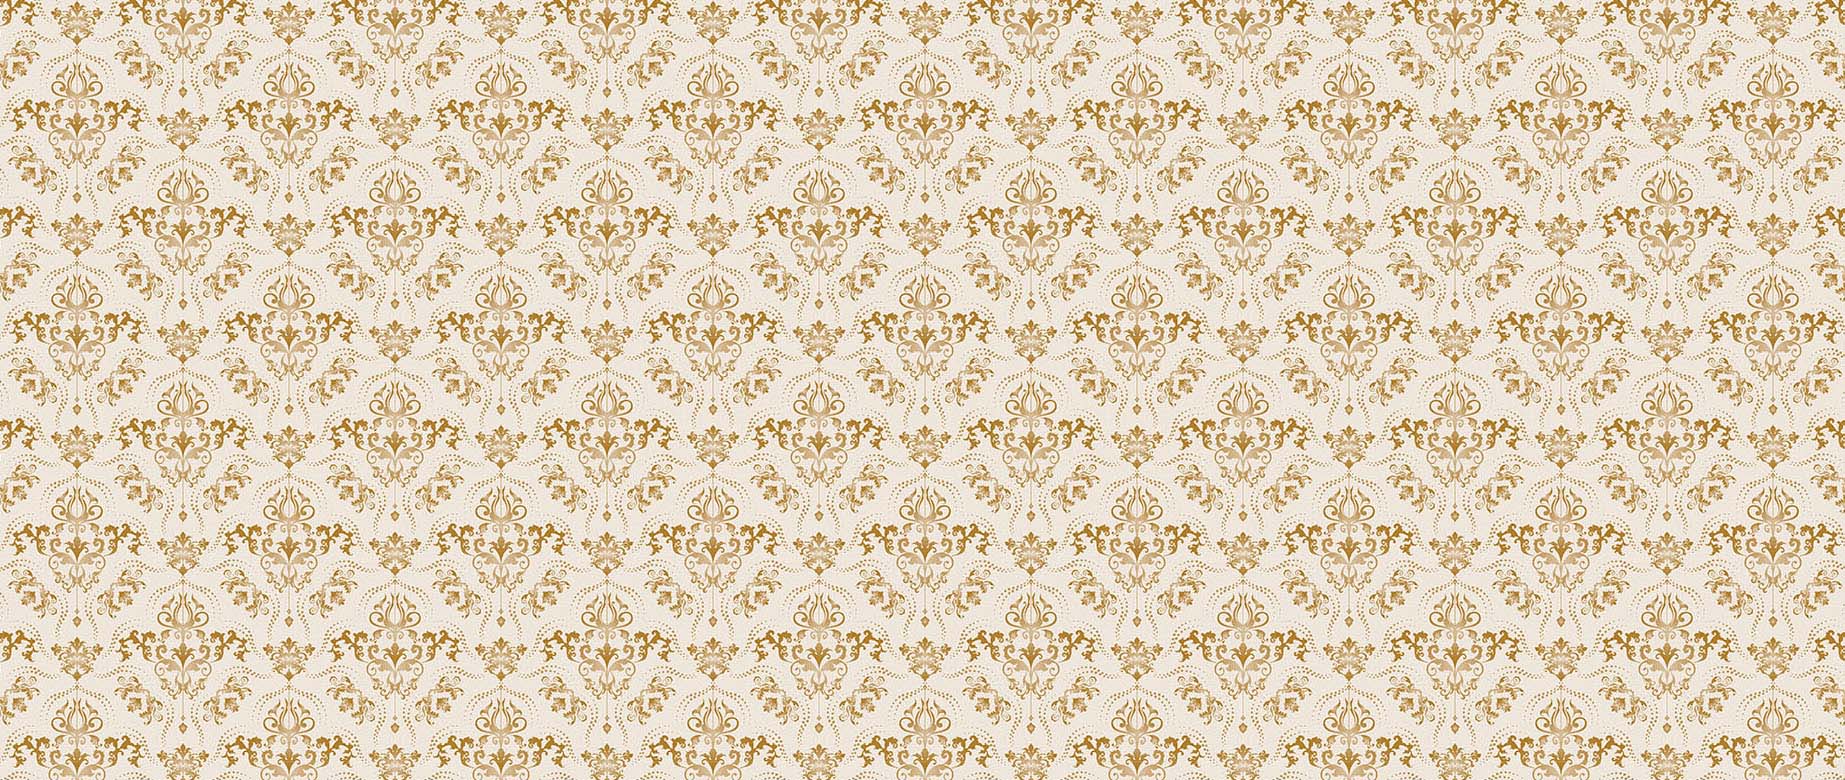 golden-classic-damask-pattern-wallpaper-view